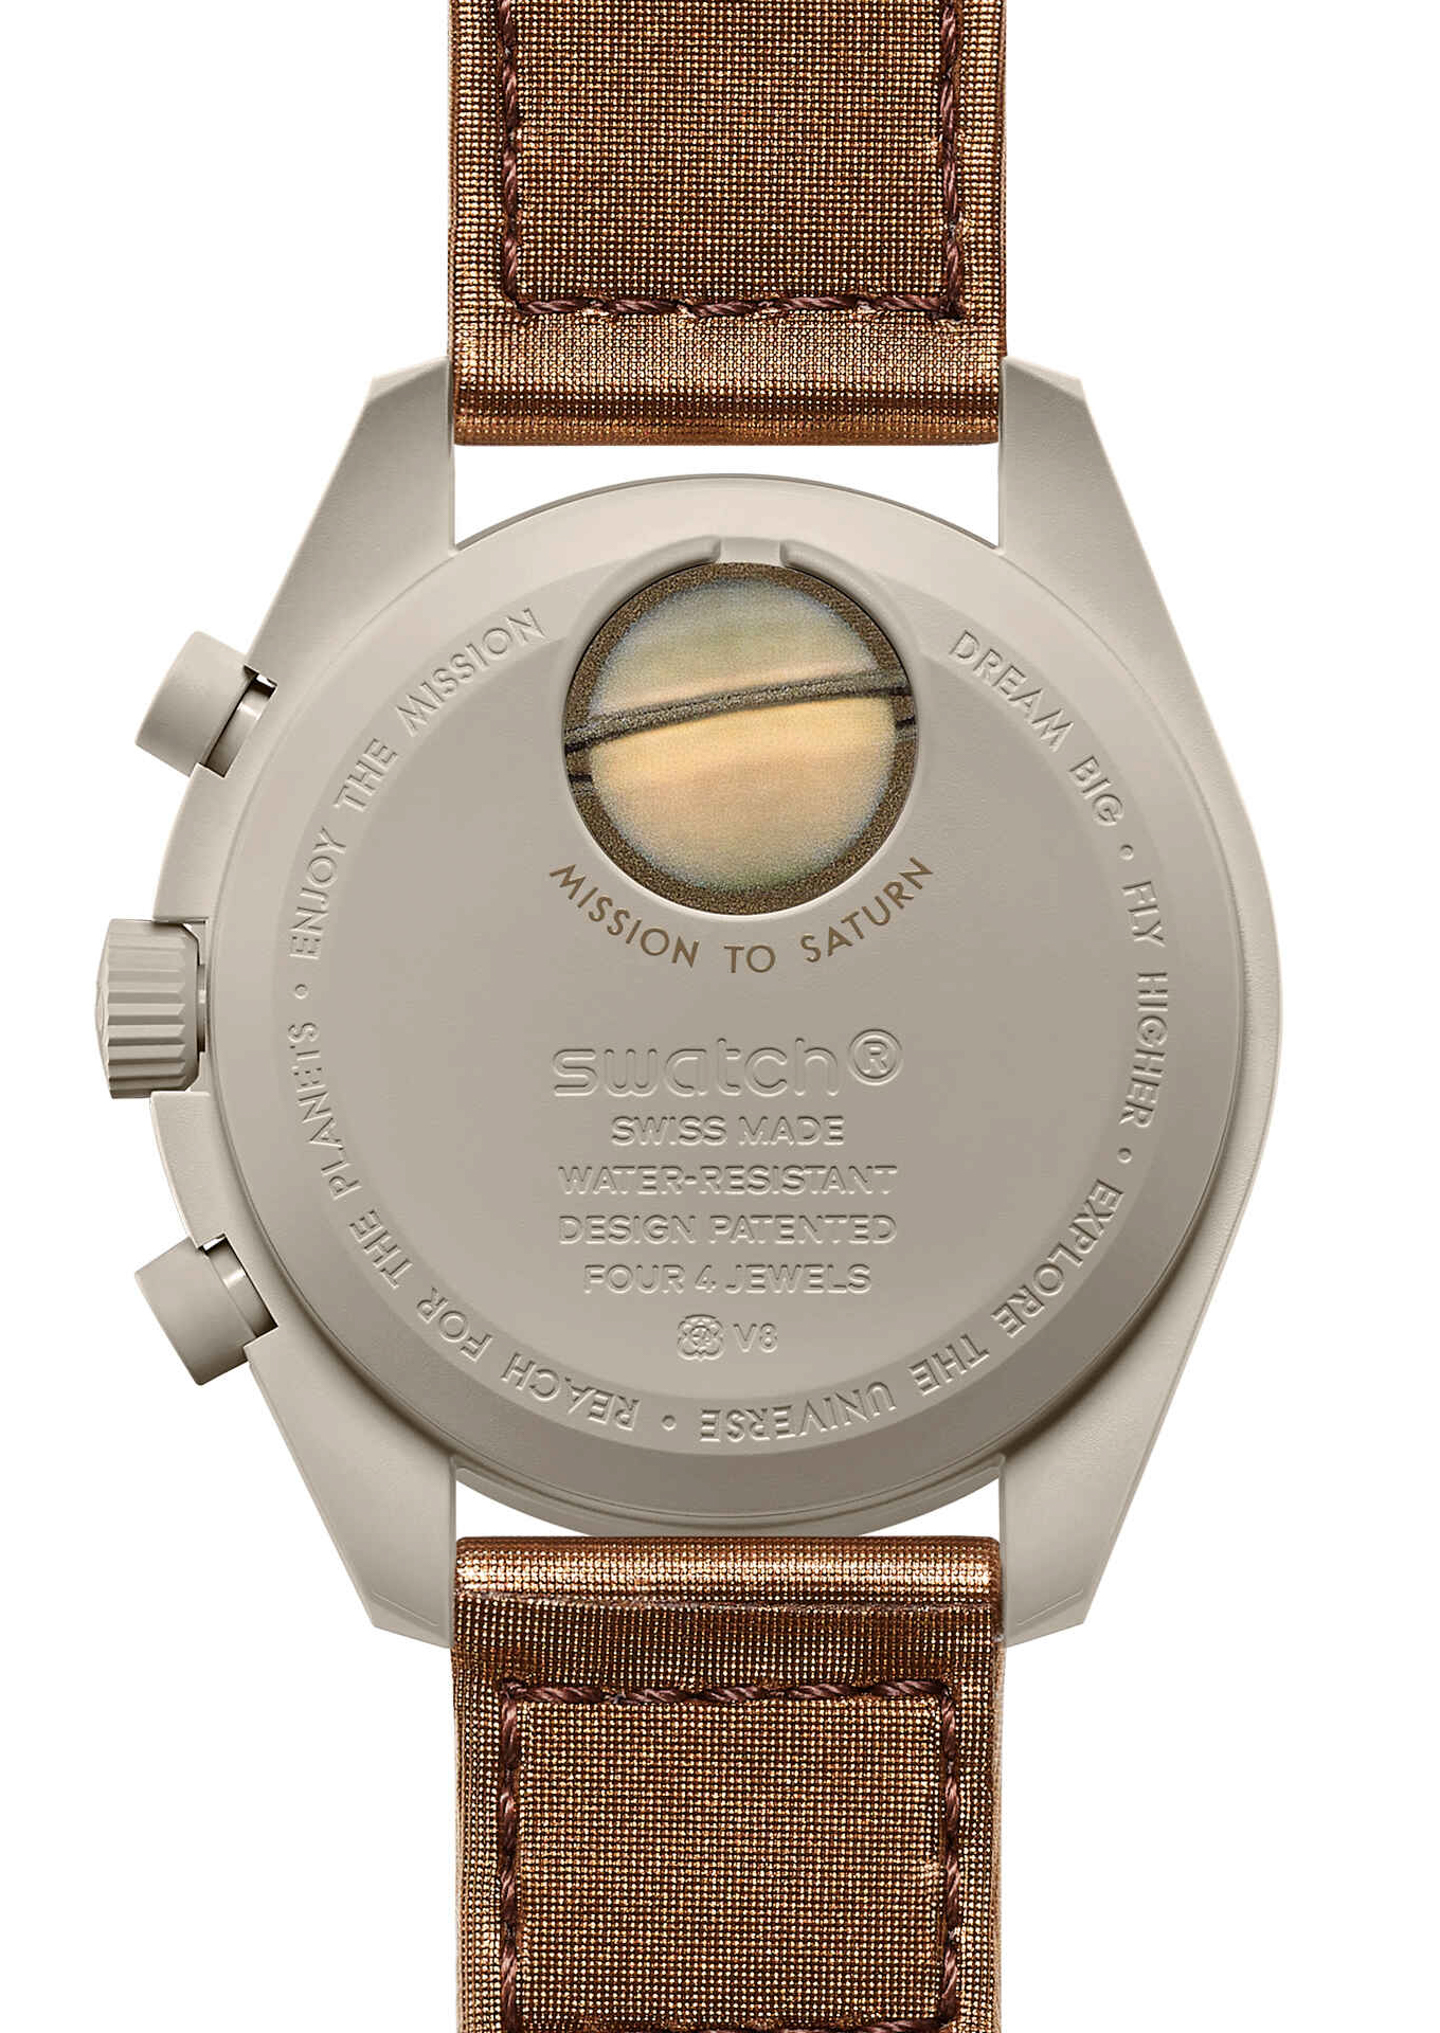 Omega X Swatch Bioceramic MoonSwatch Speedmaster Watches